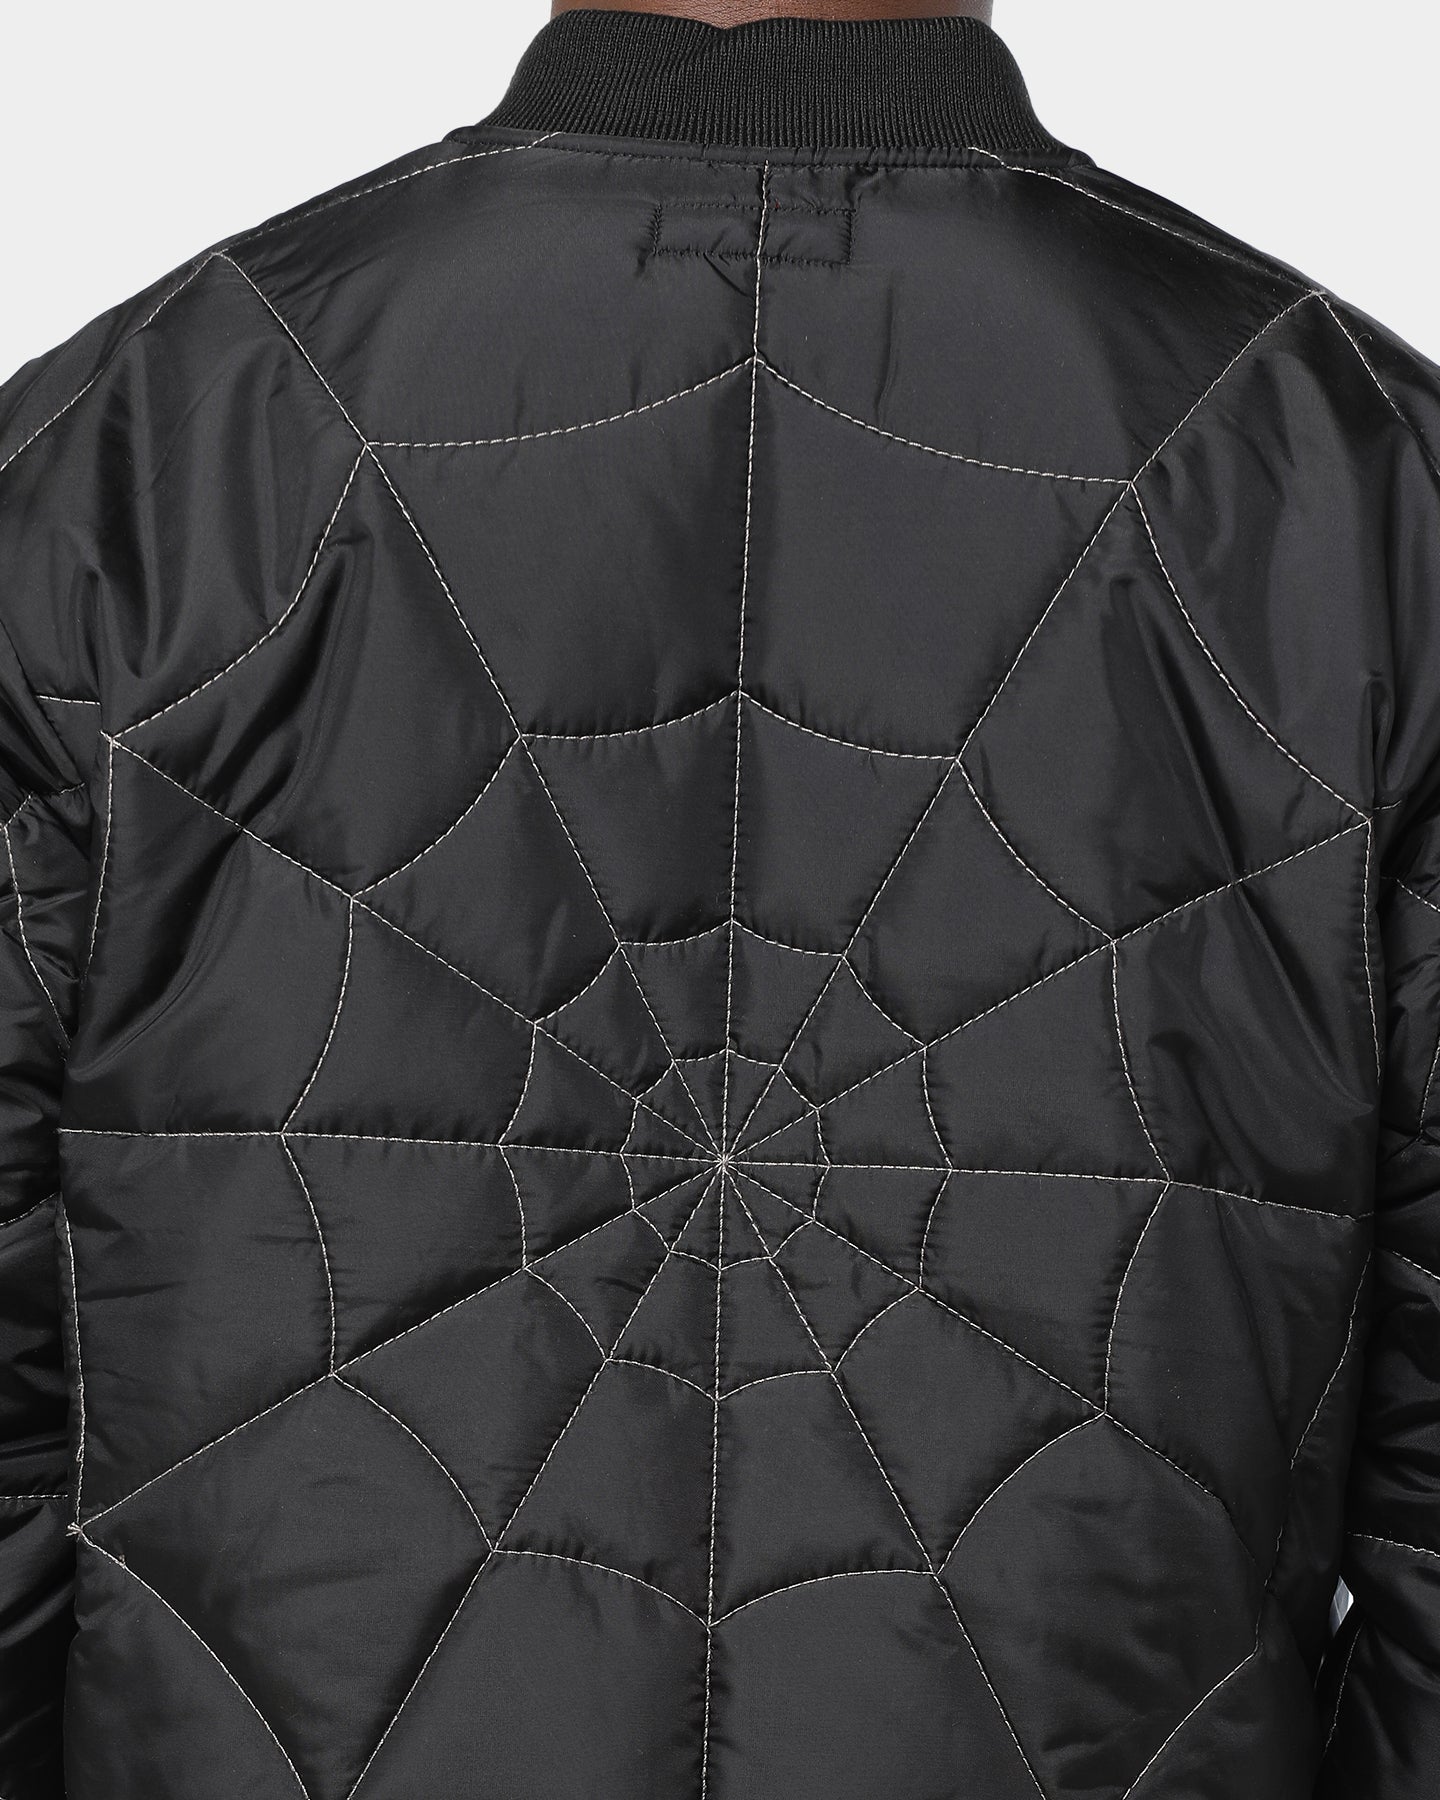 spider web quilted work jacket